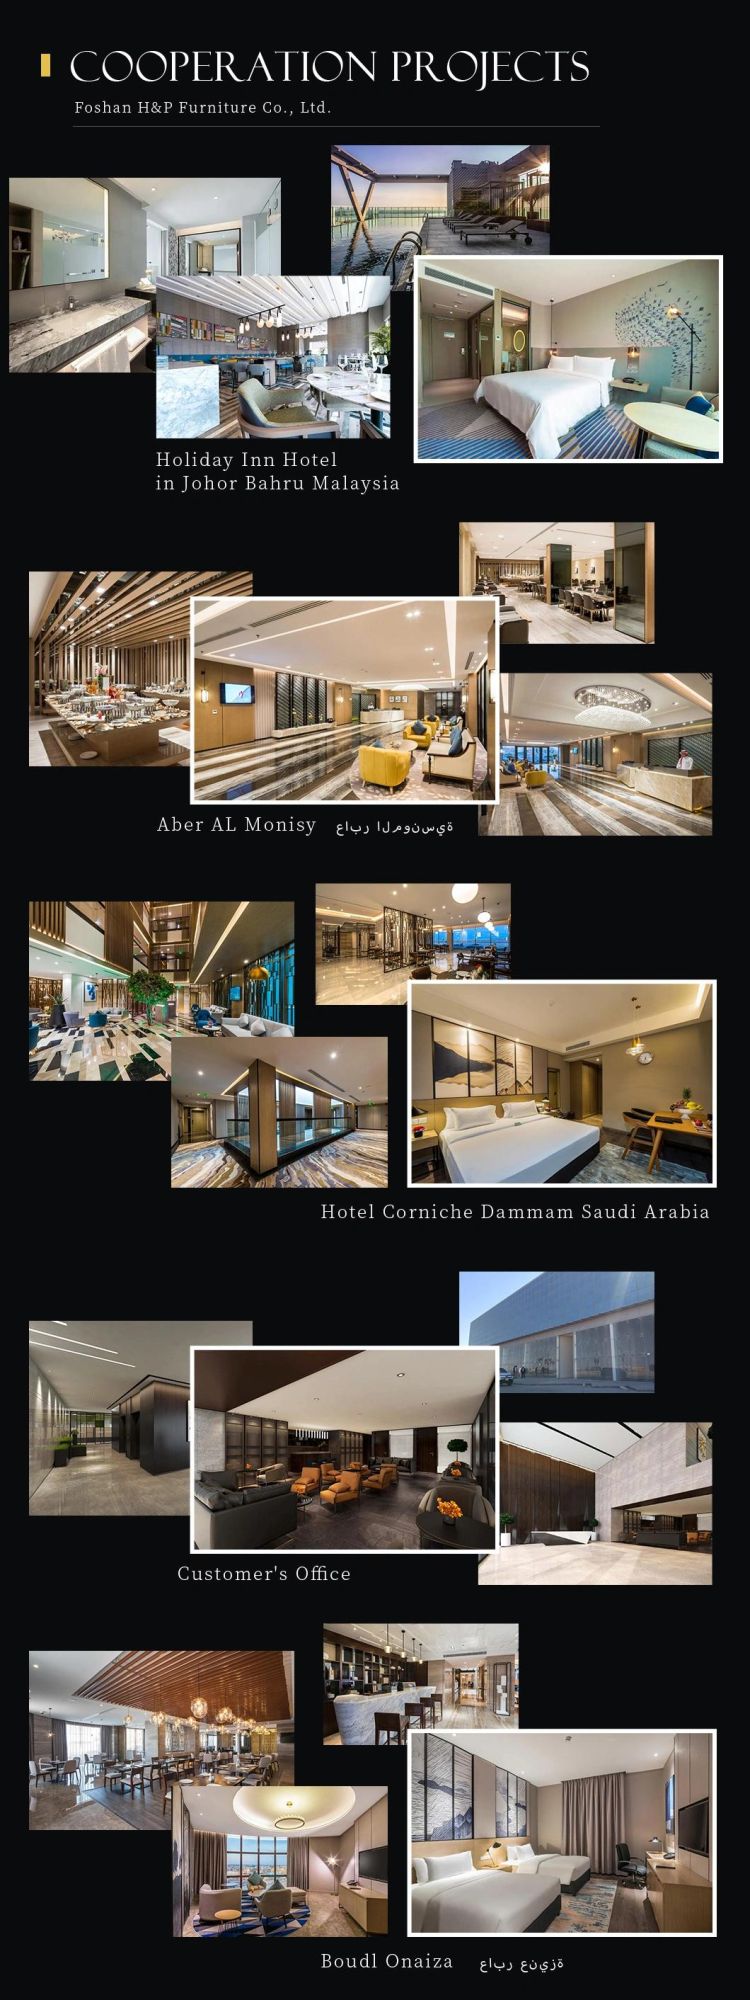 Customized 5 Star Luxury Modern Design Hilton Complete Hotel Bedroom Furniture Sets